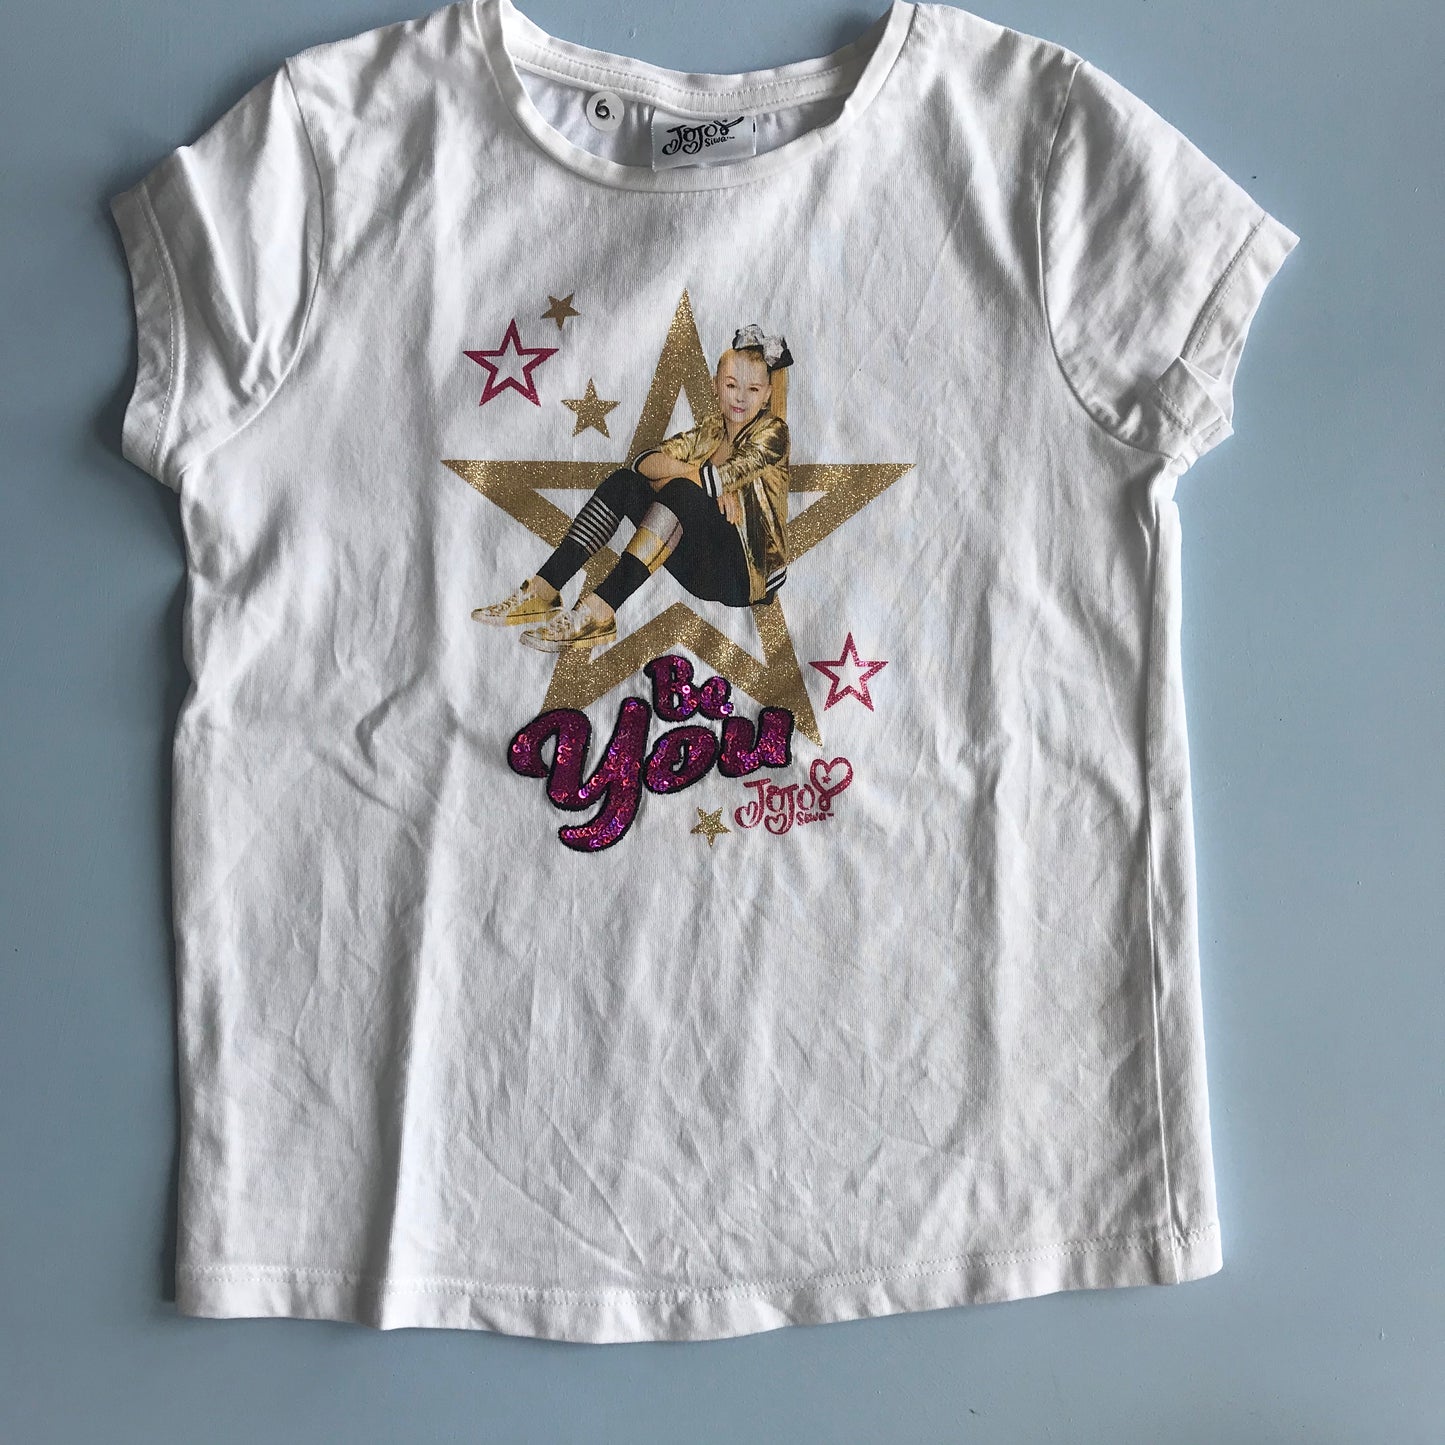 T-shirt - Jojo Siwa - Age 6